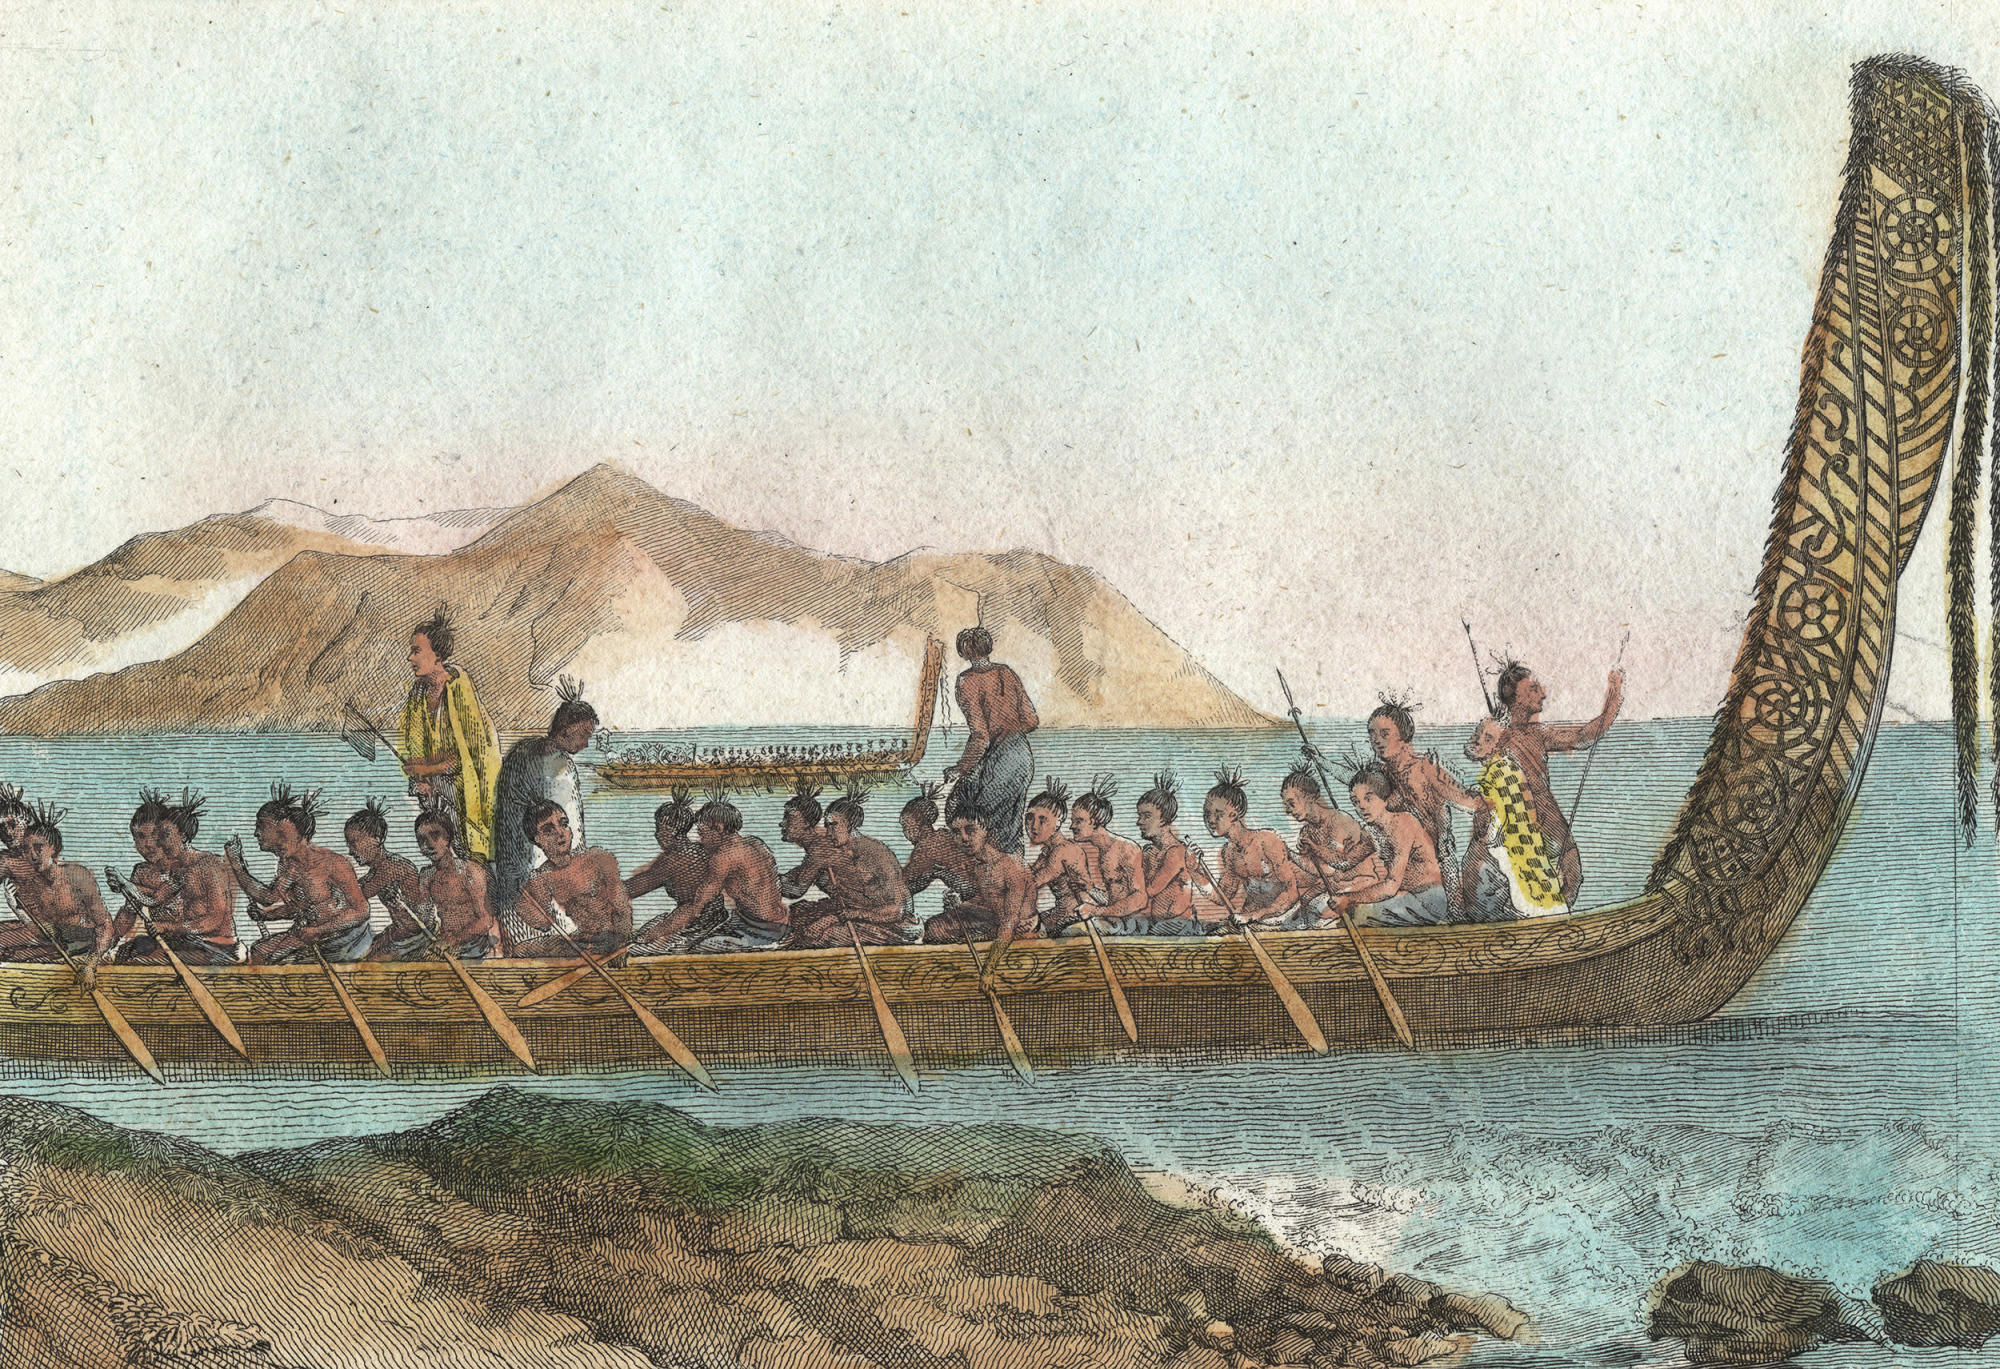 Polynesians discovered Antarctica over 1,300 years ago, maori antarctica discovery